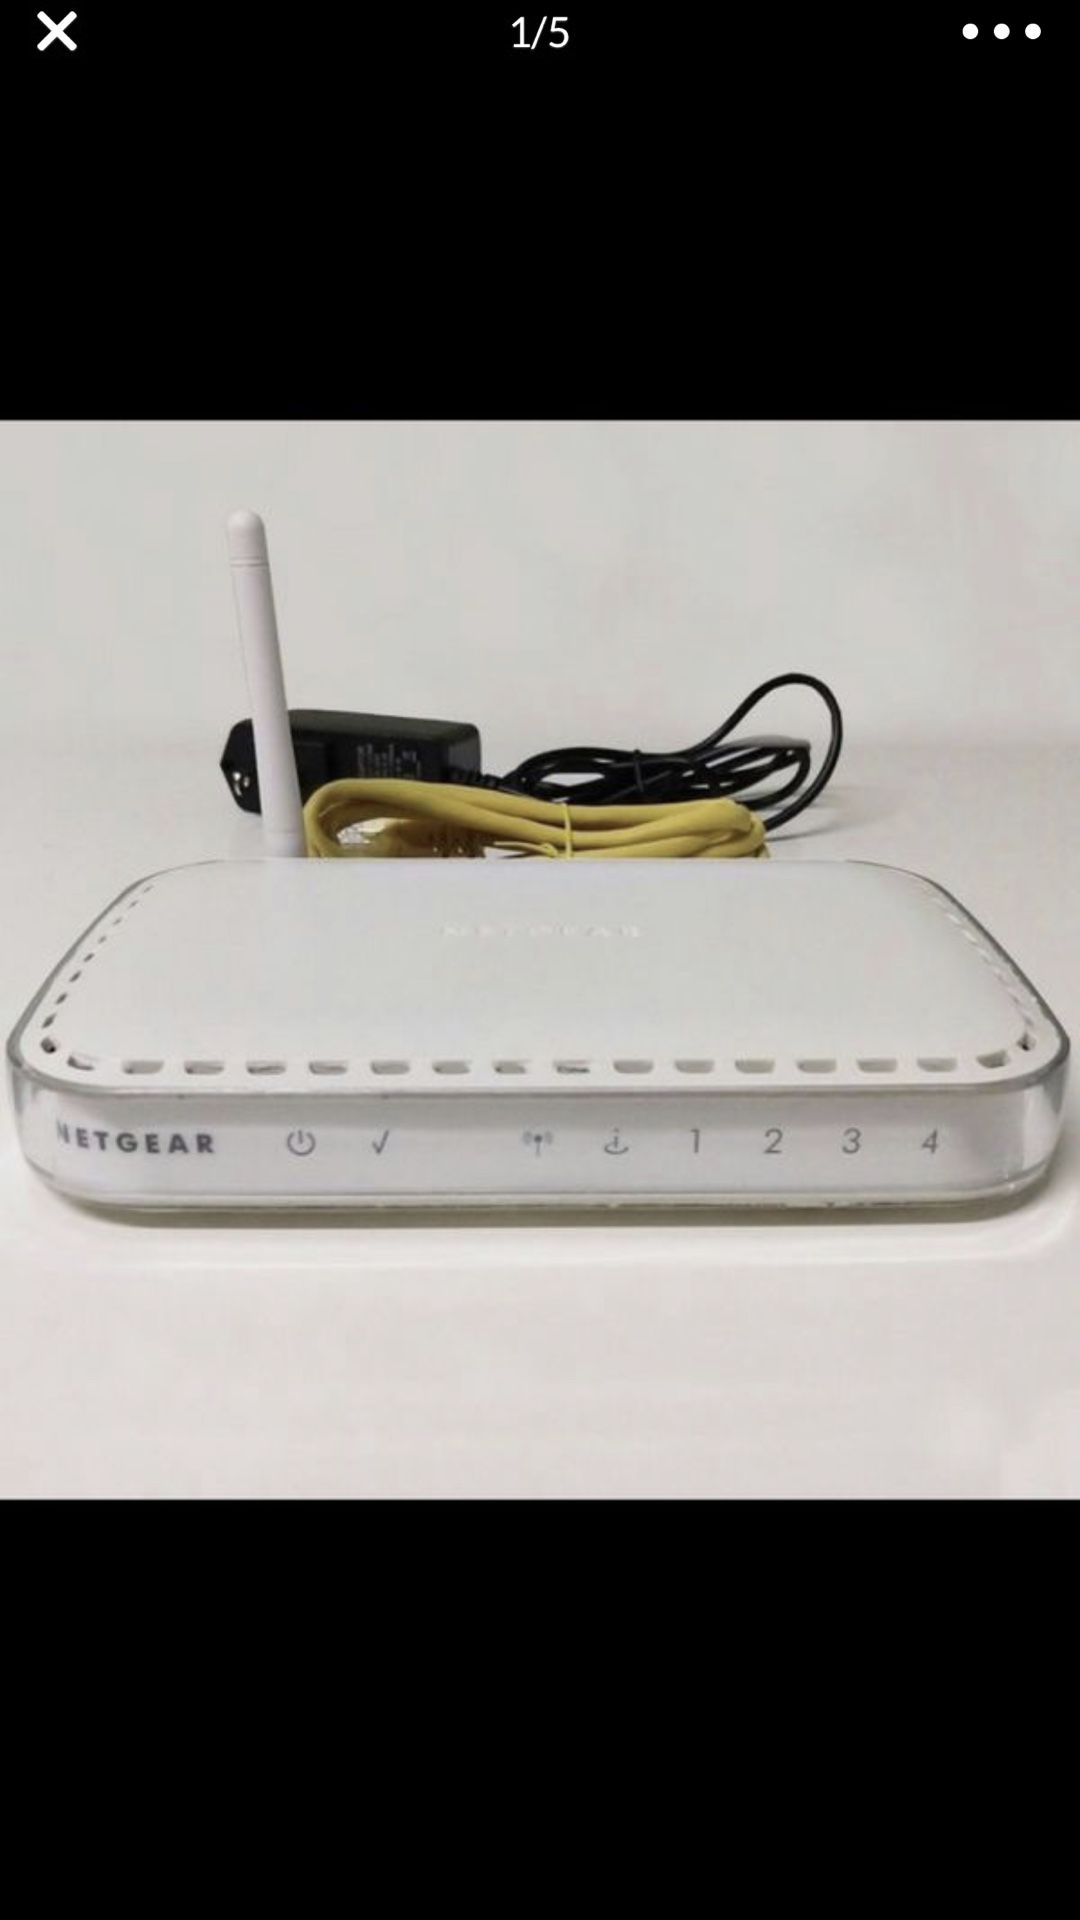 Netgear Wireless G 4 port Wireless-G Router WGR614 v9